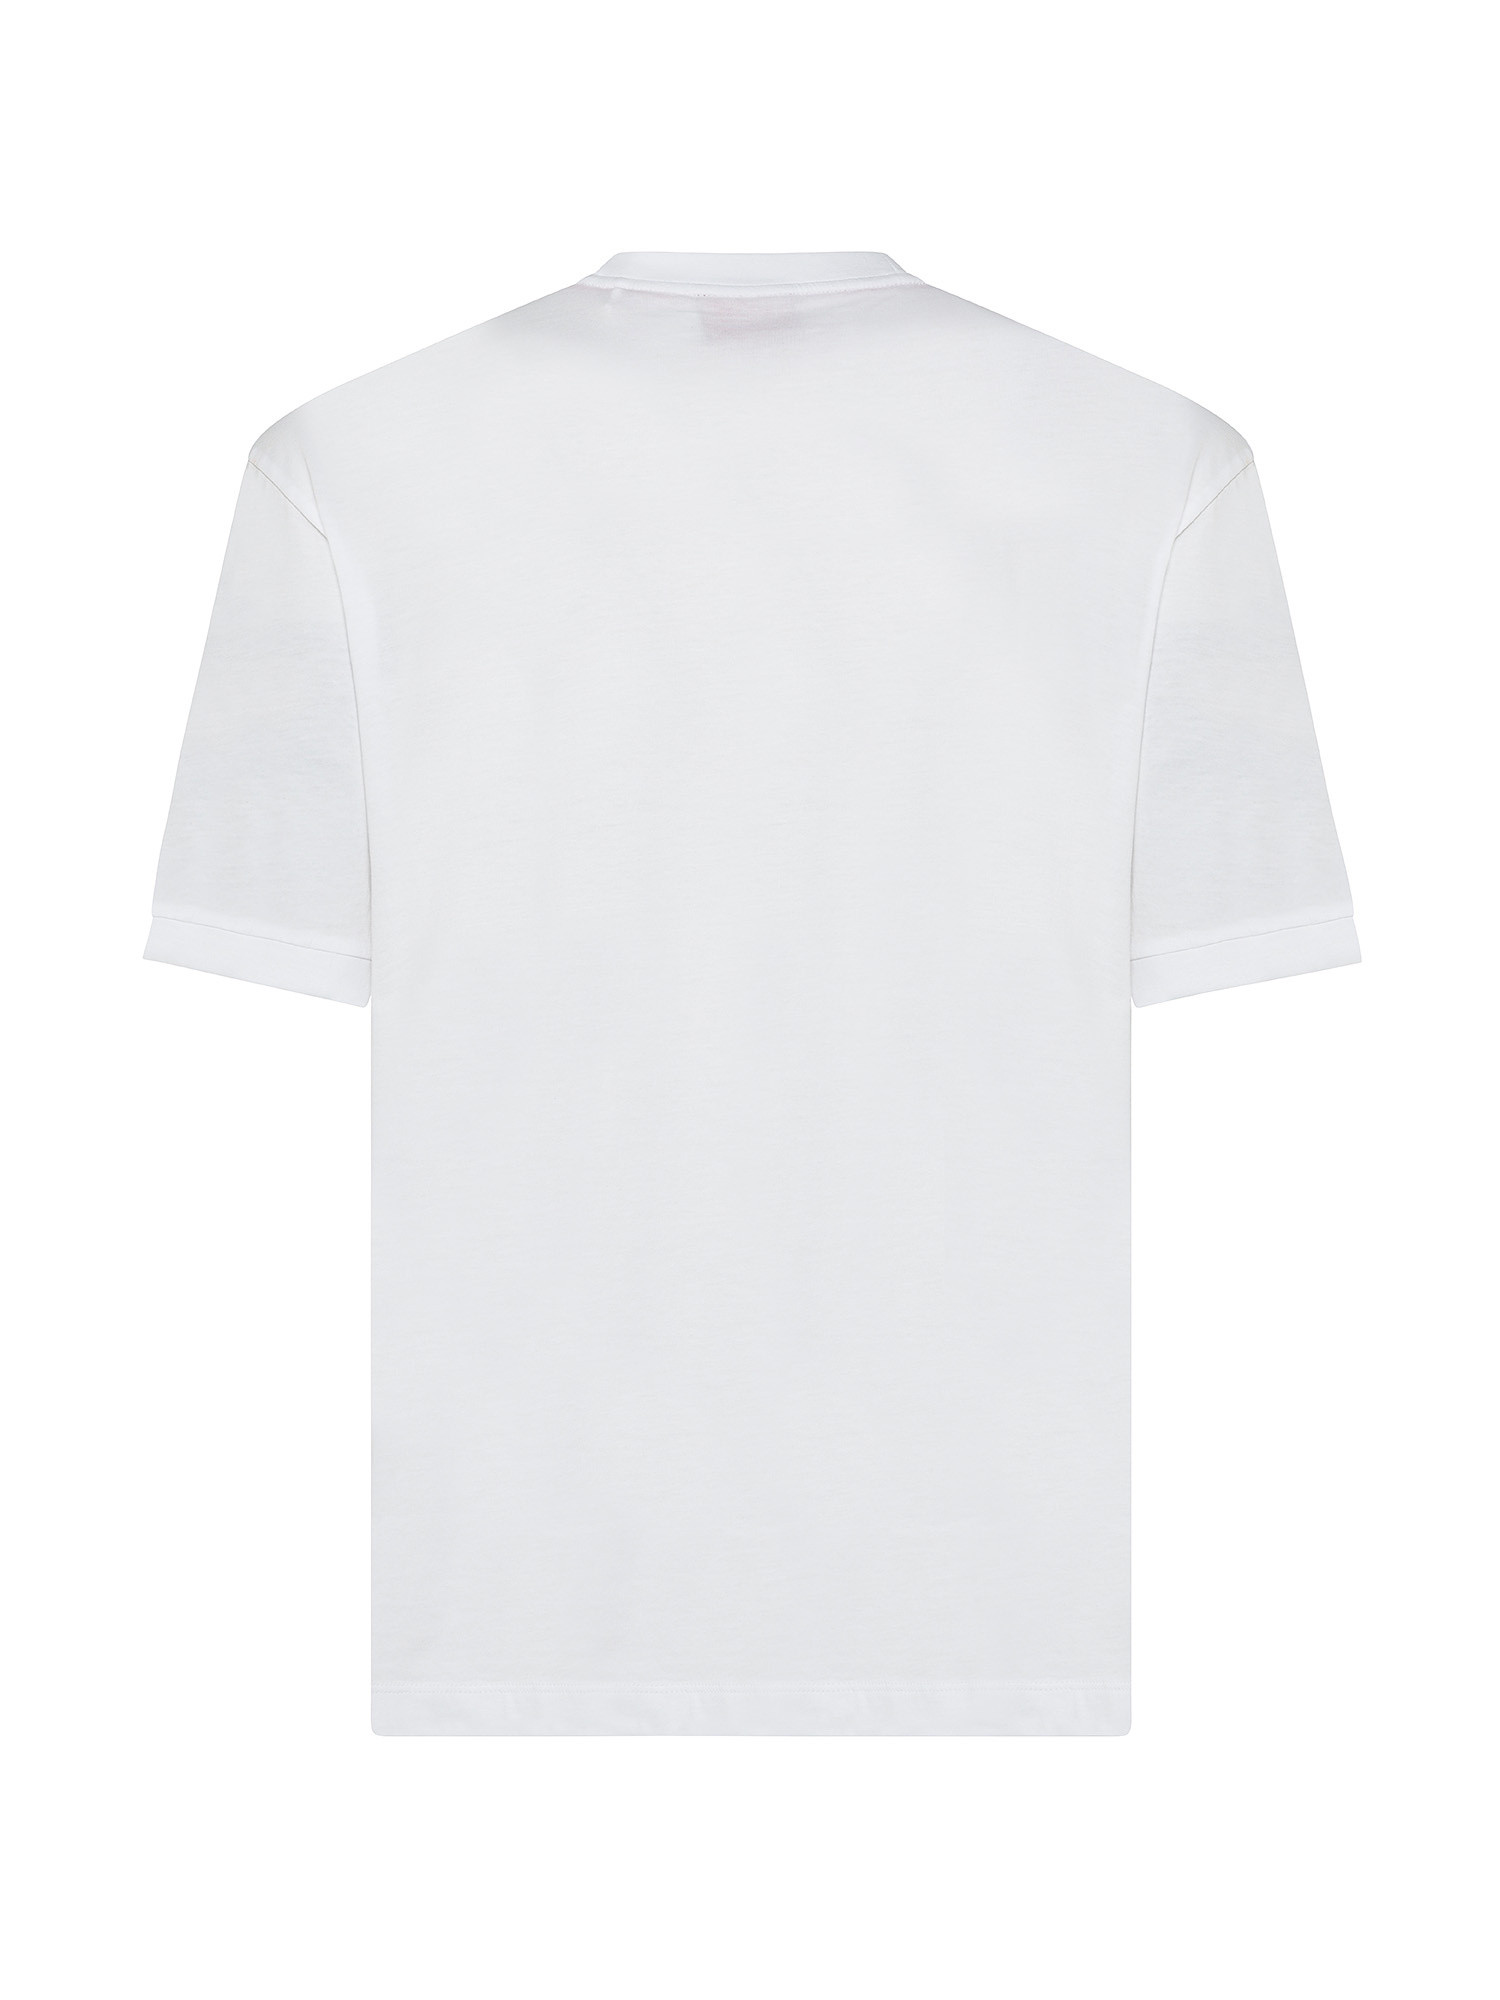 Hugo - T-shirt con logo ricamato in cotone, Bianco, large image number 1